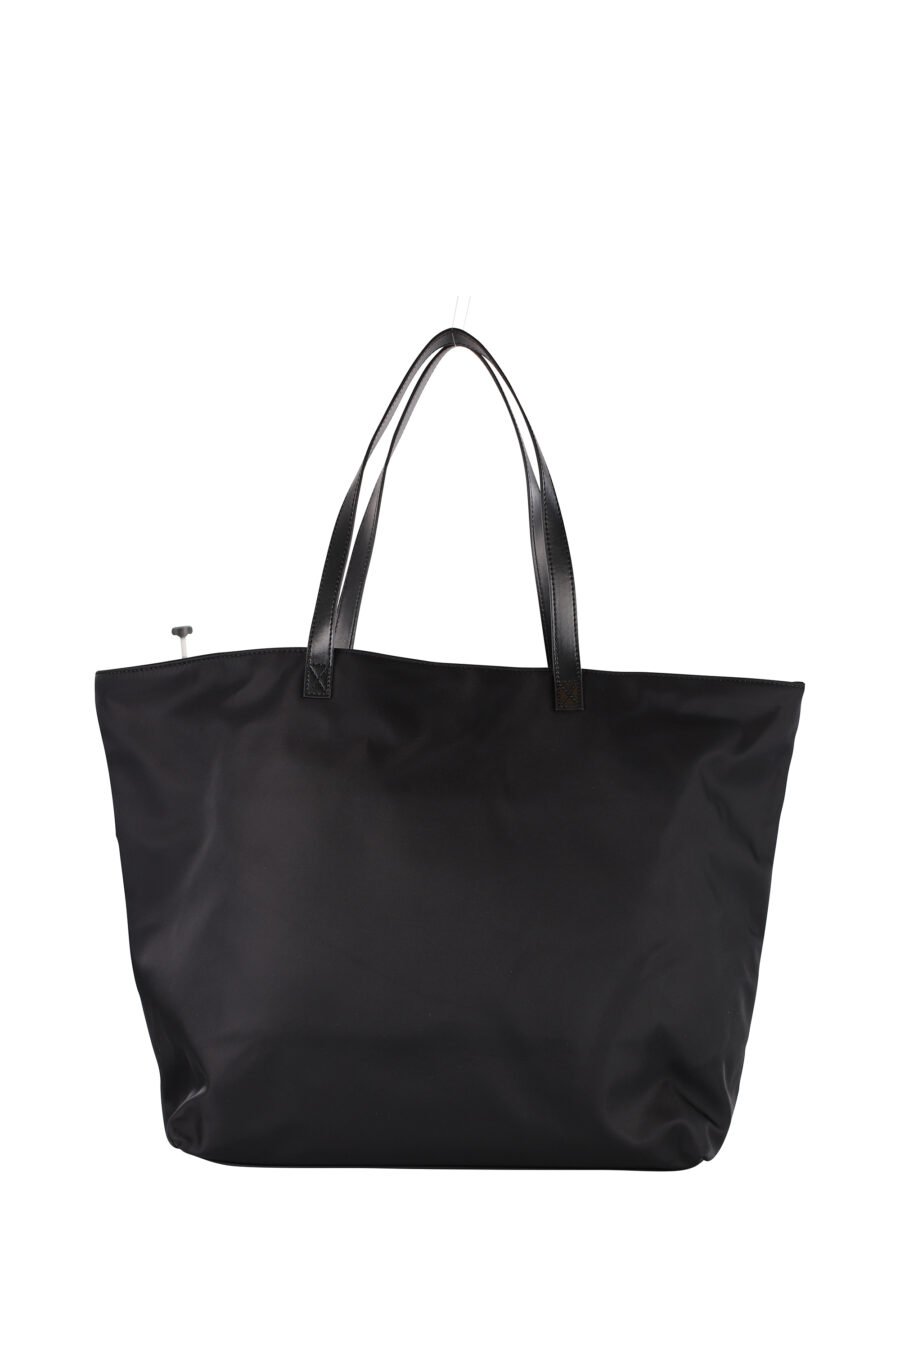 Black shopper bag with "Icon" logo - IMG 1341